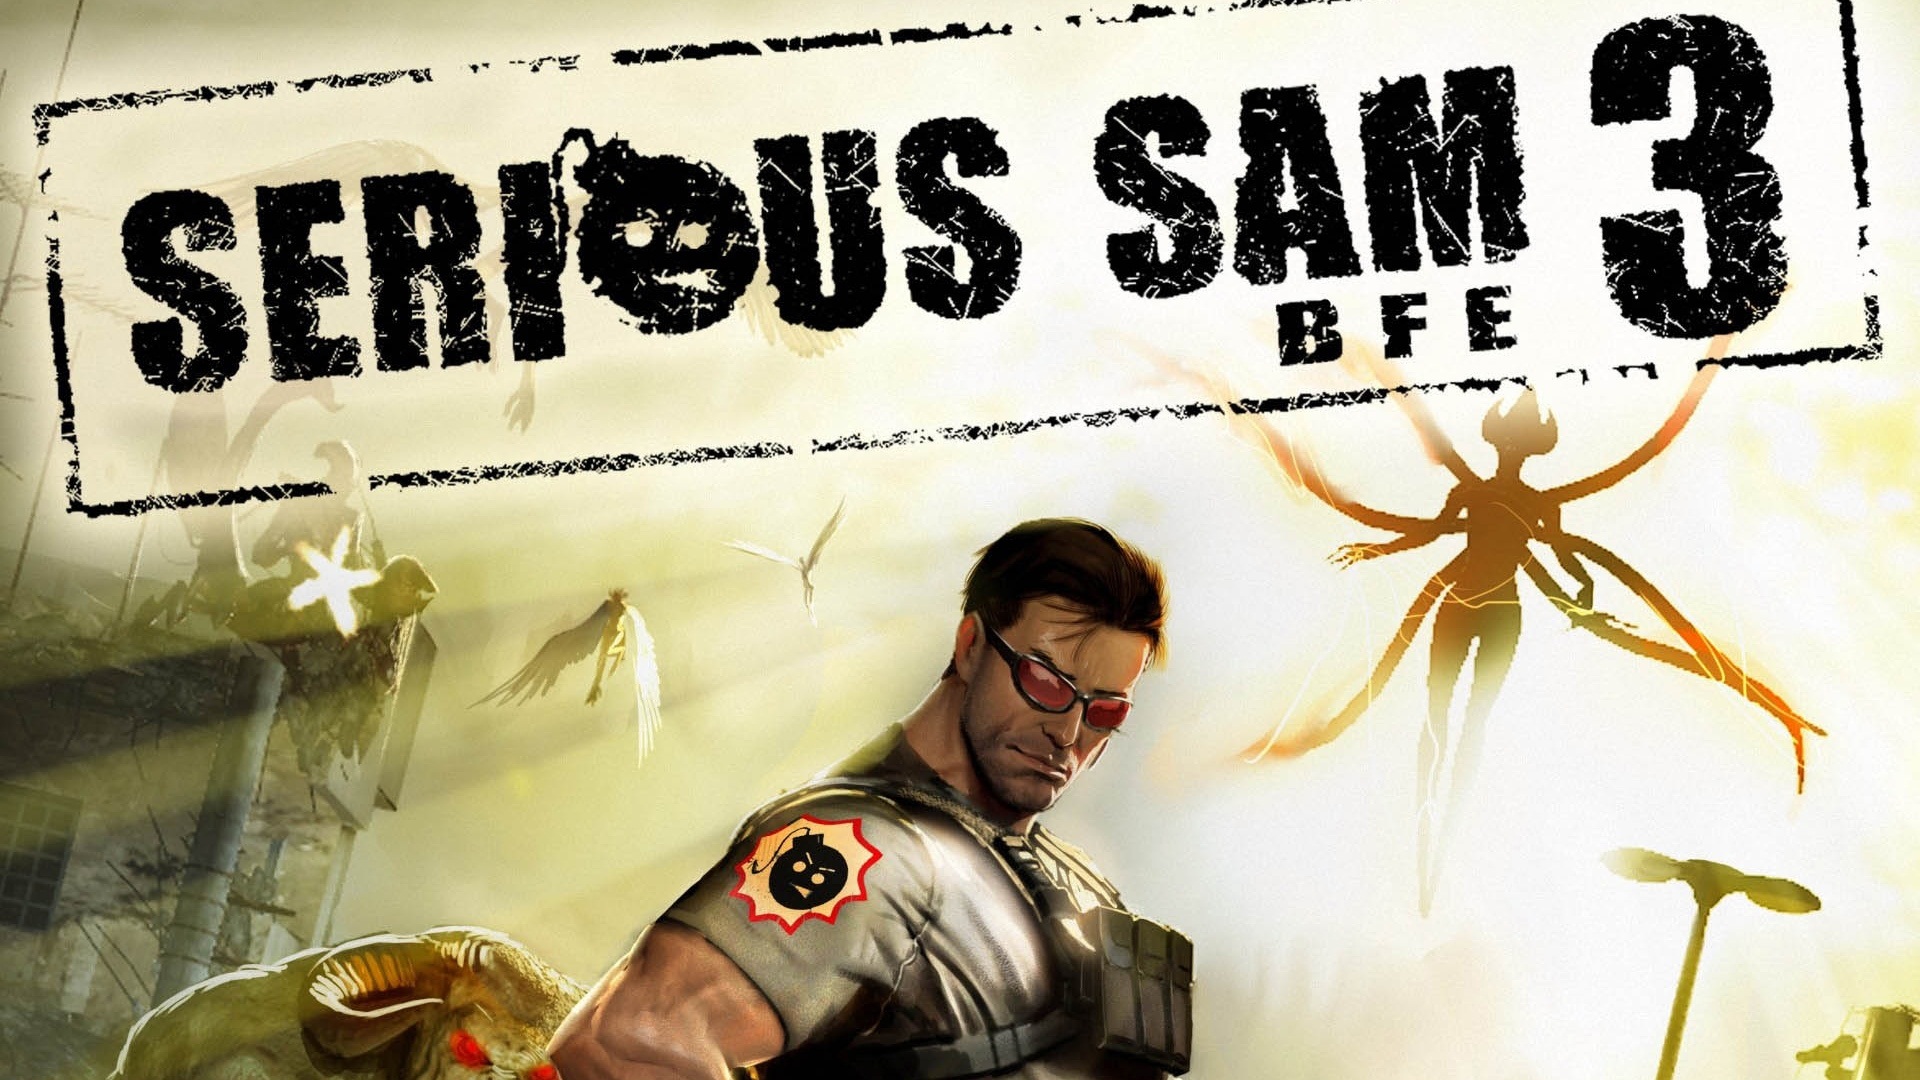 Serious Sam 3 Backgrounds, Compatible - PC, Mobile, Gadgets| 1920x1080 px